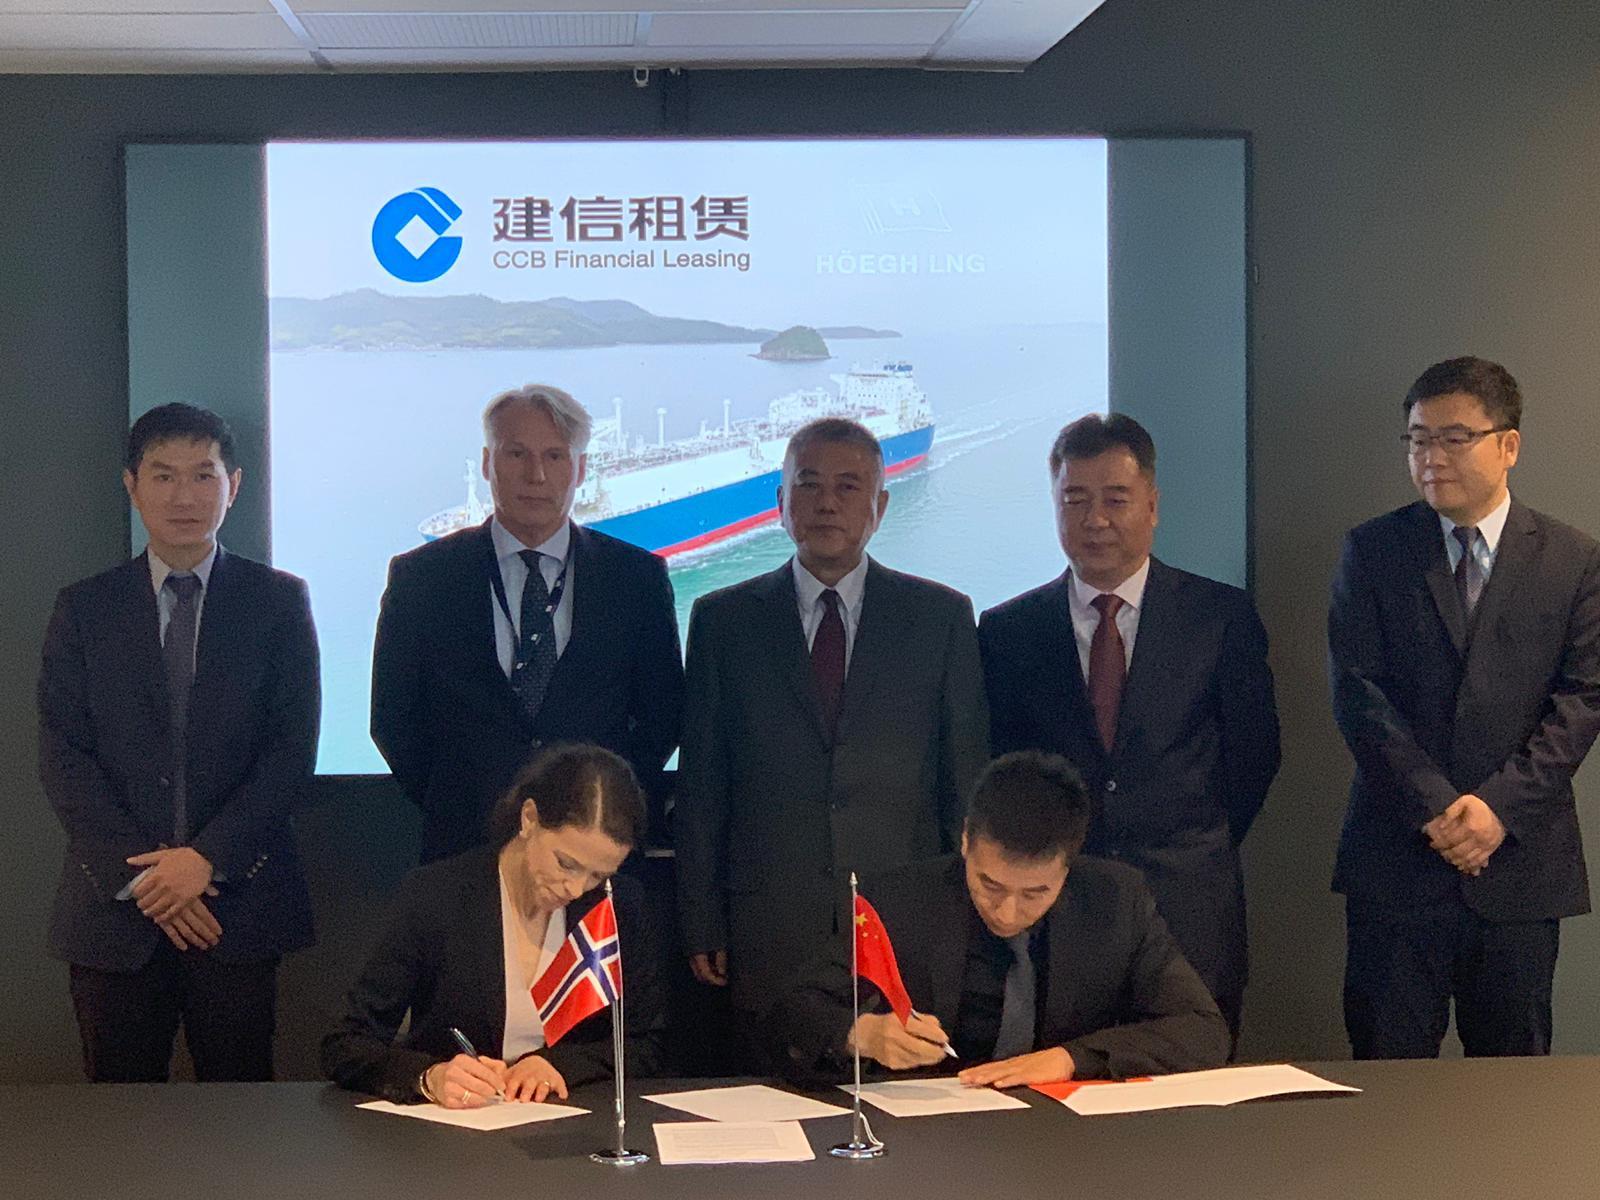 Höegh LNG, China Construction Bank in FSRU deal